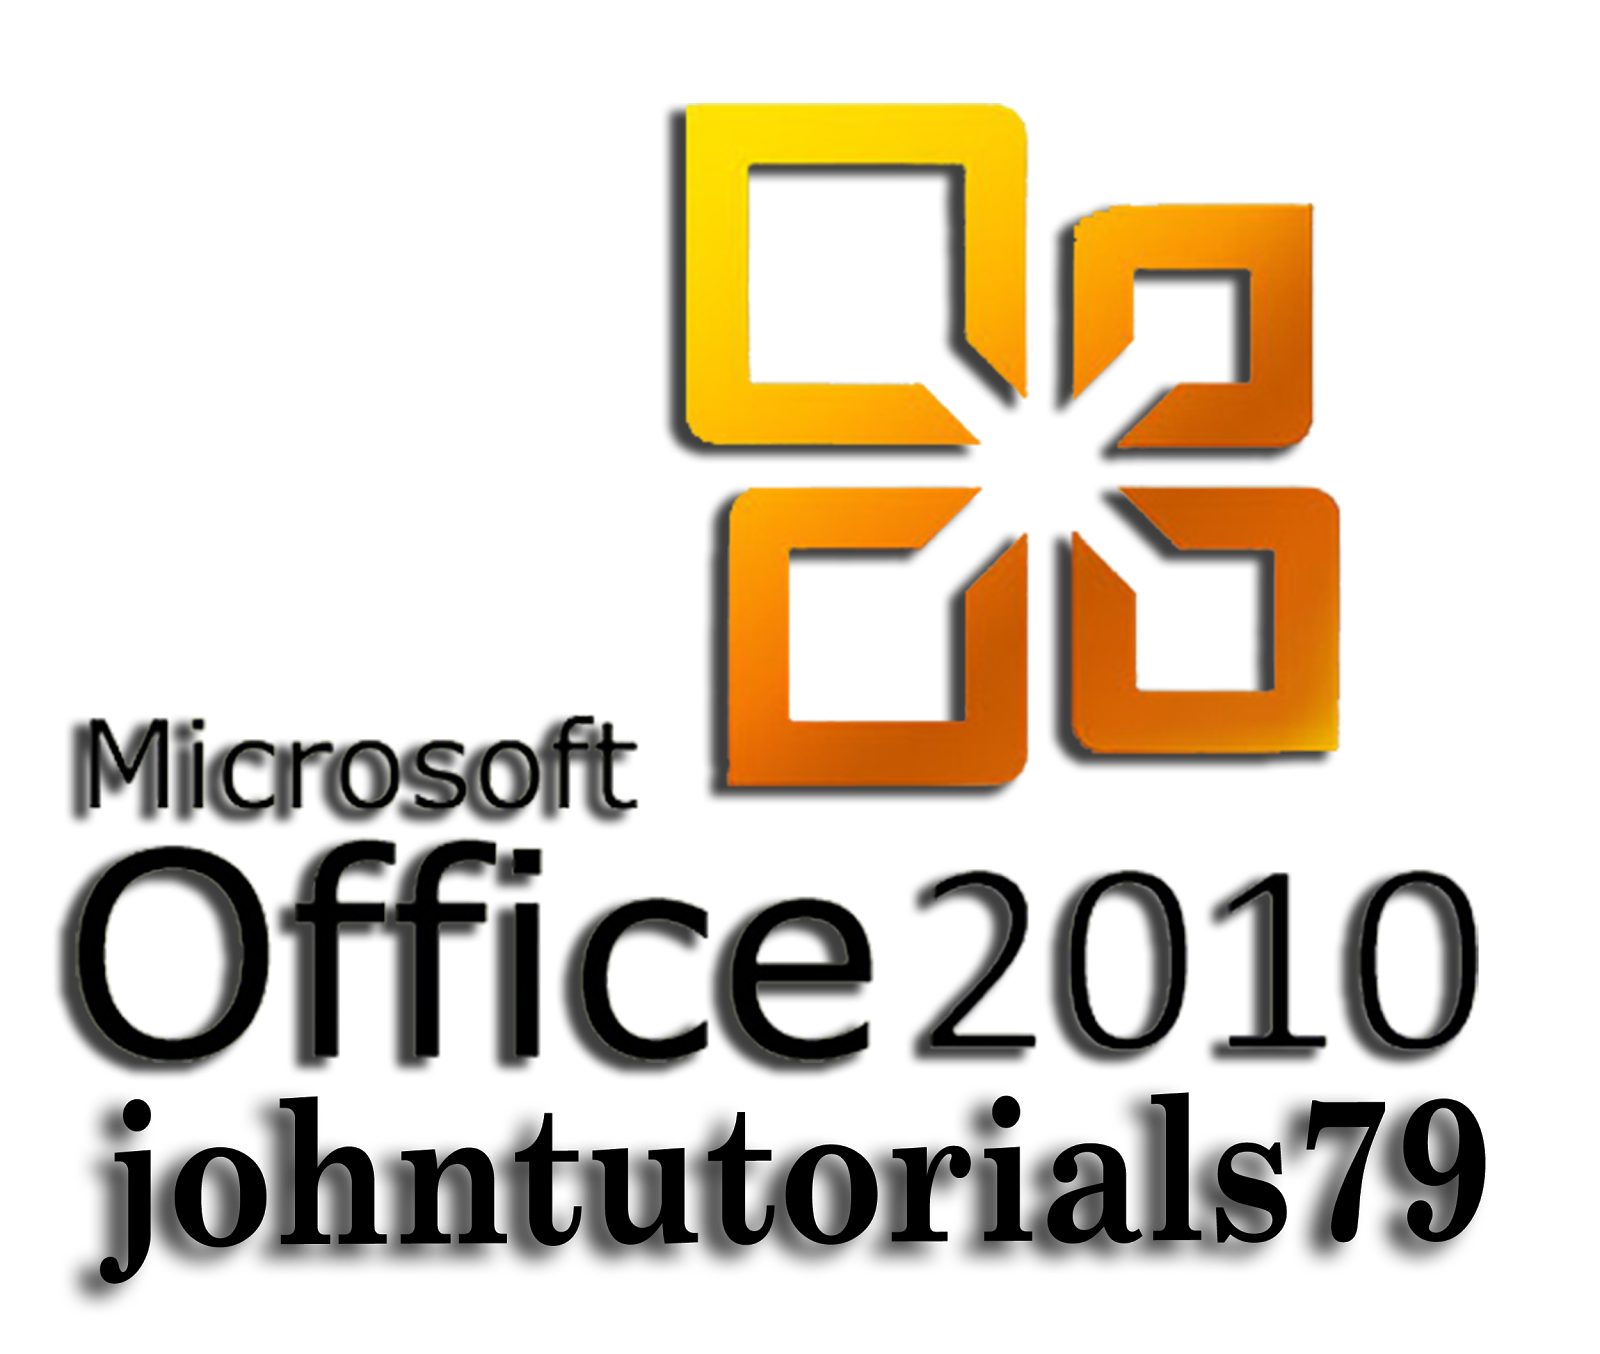 Microsoft Office Full